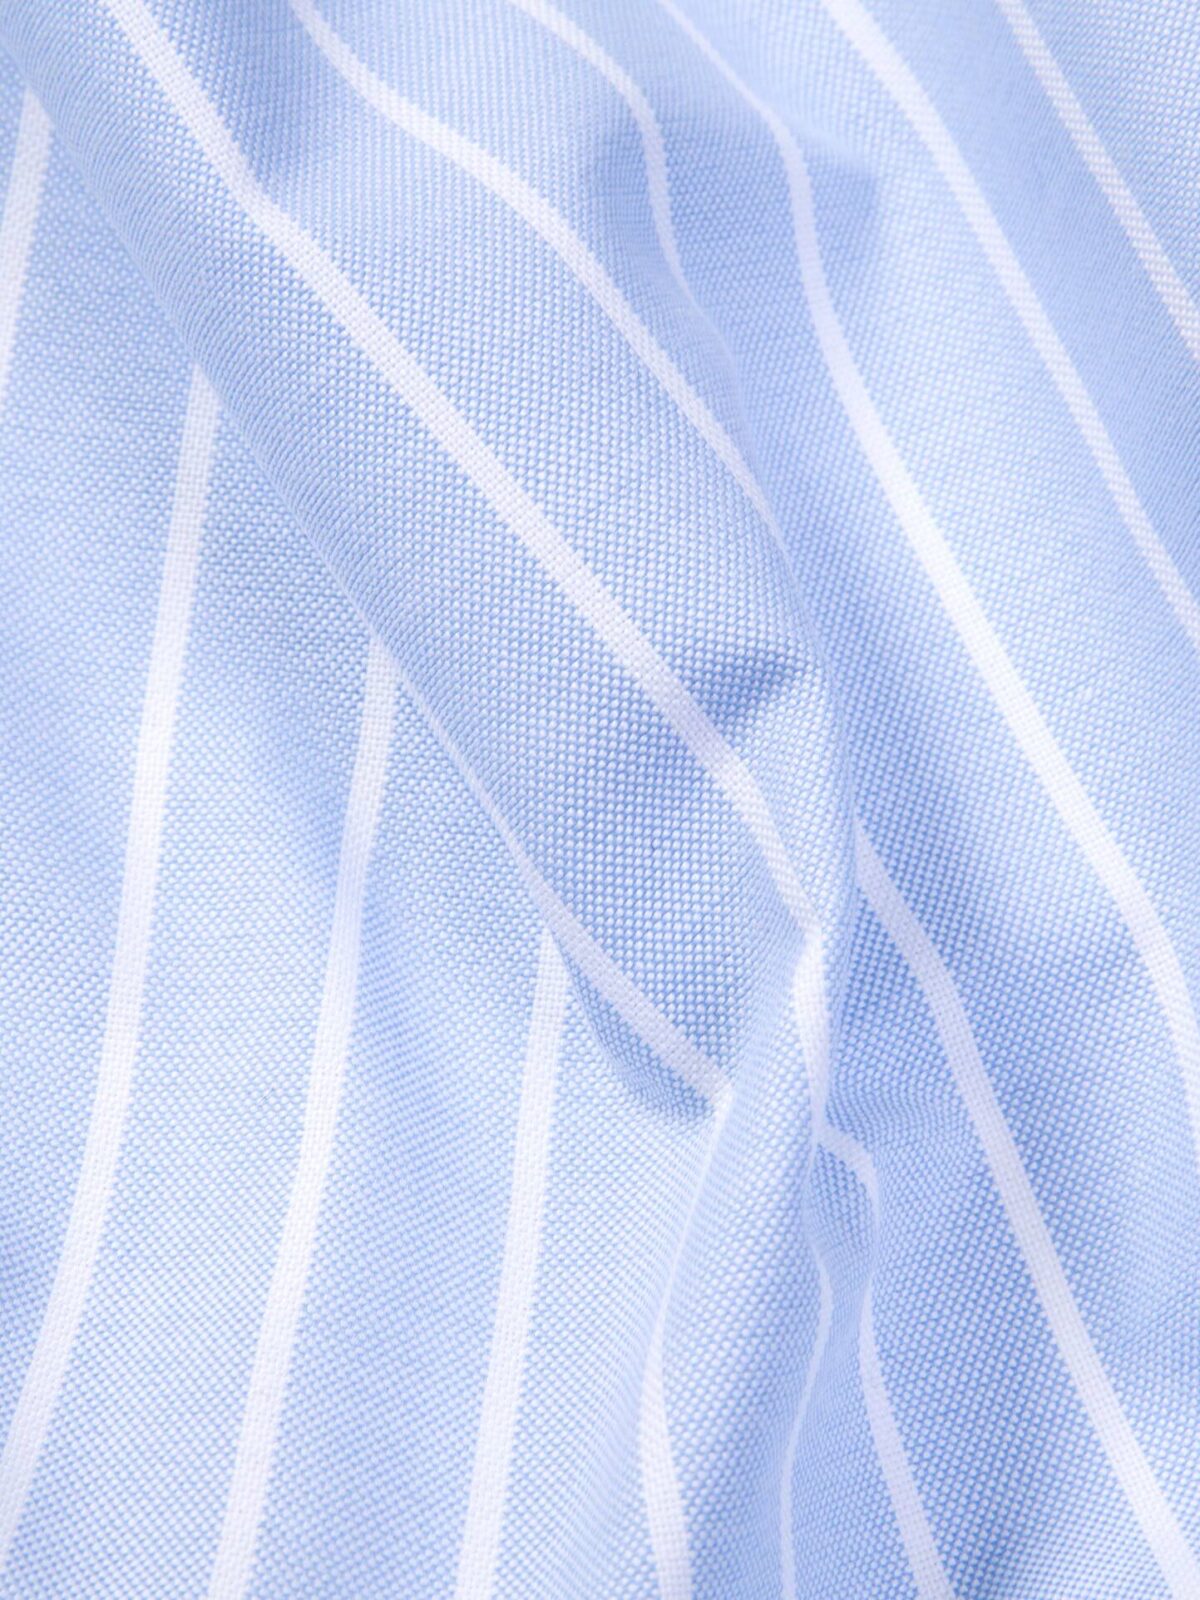 American Pima White Oxford Cloth Shirts by Proper Cloth